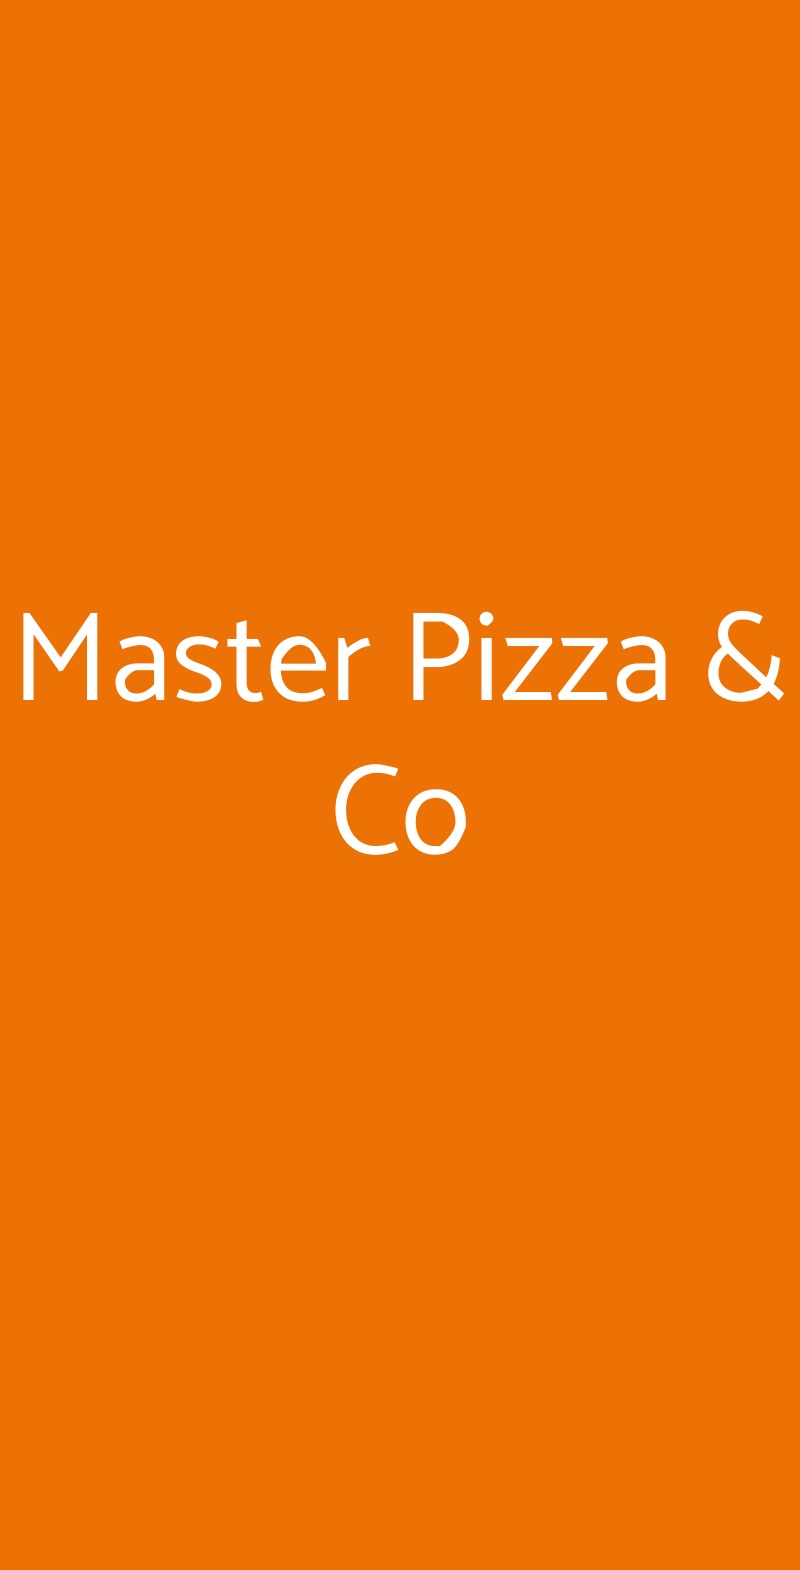 Master Pizza & Co Firenze menù 1 pagina